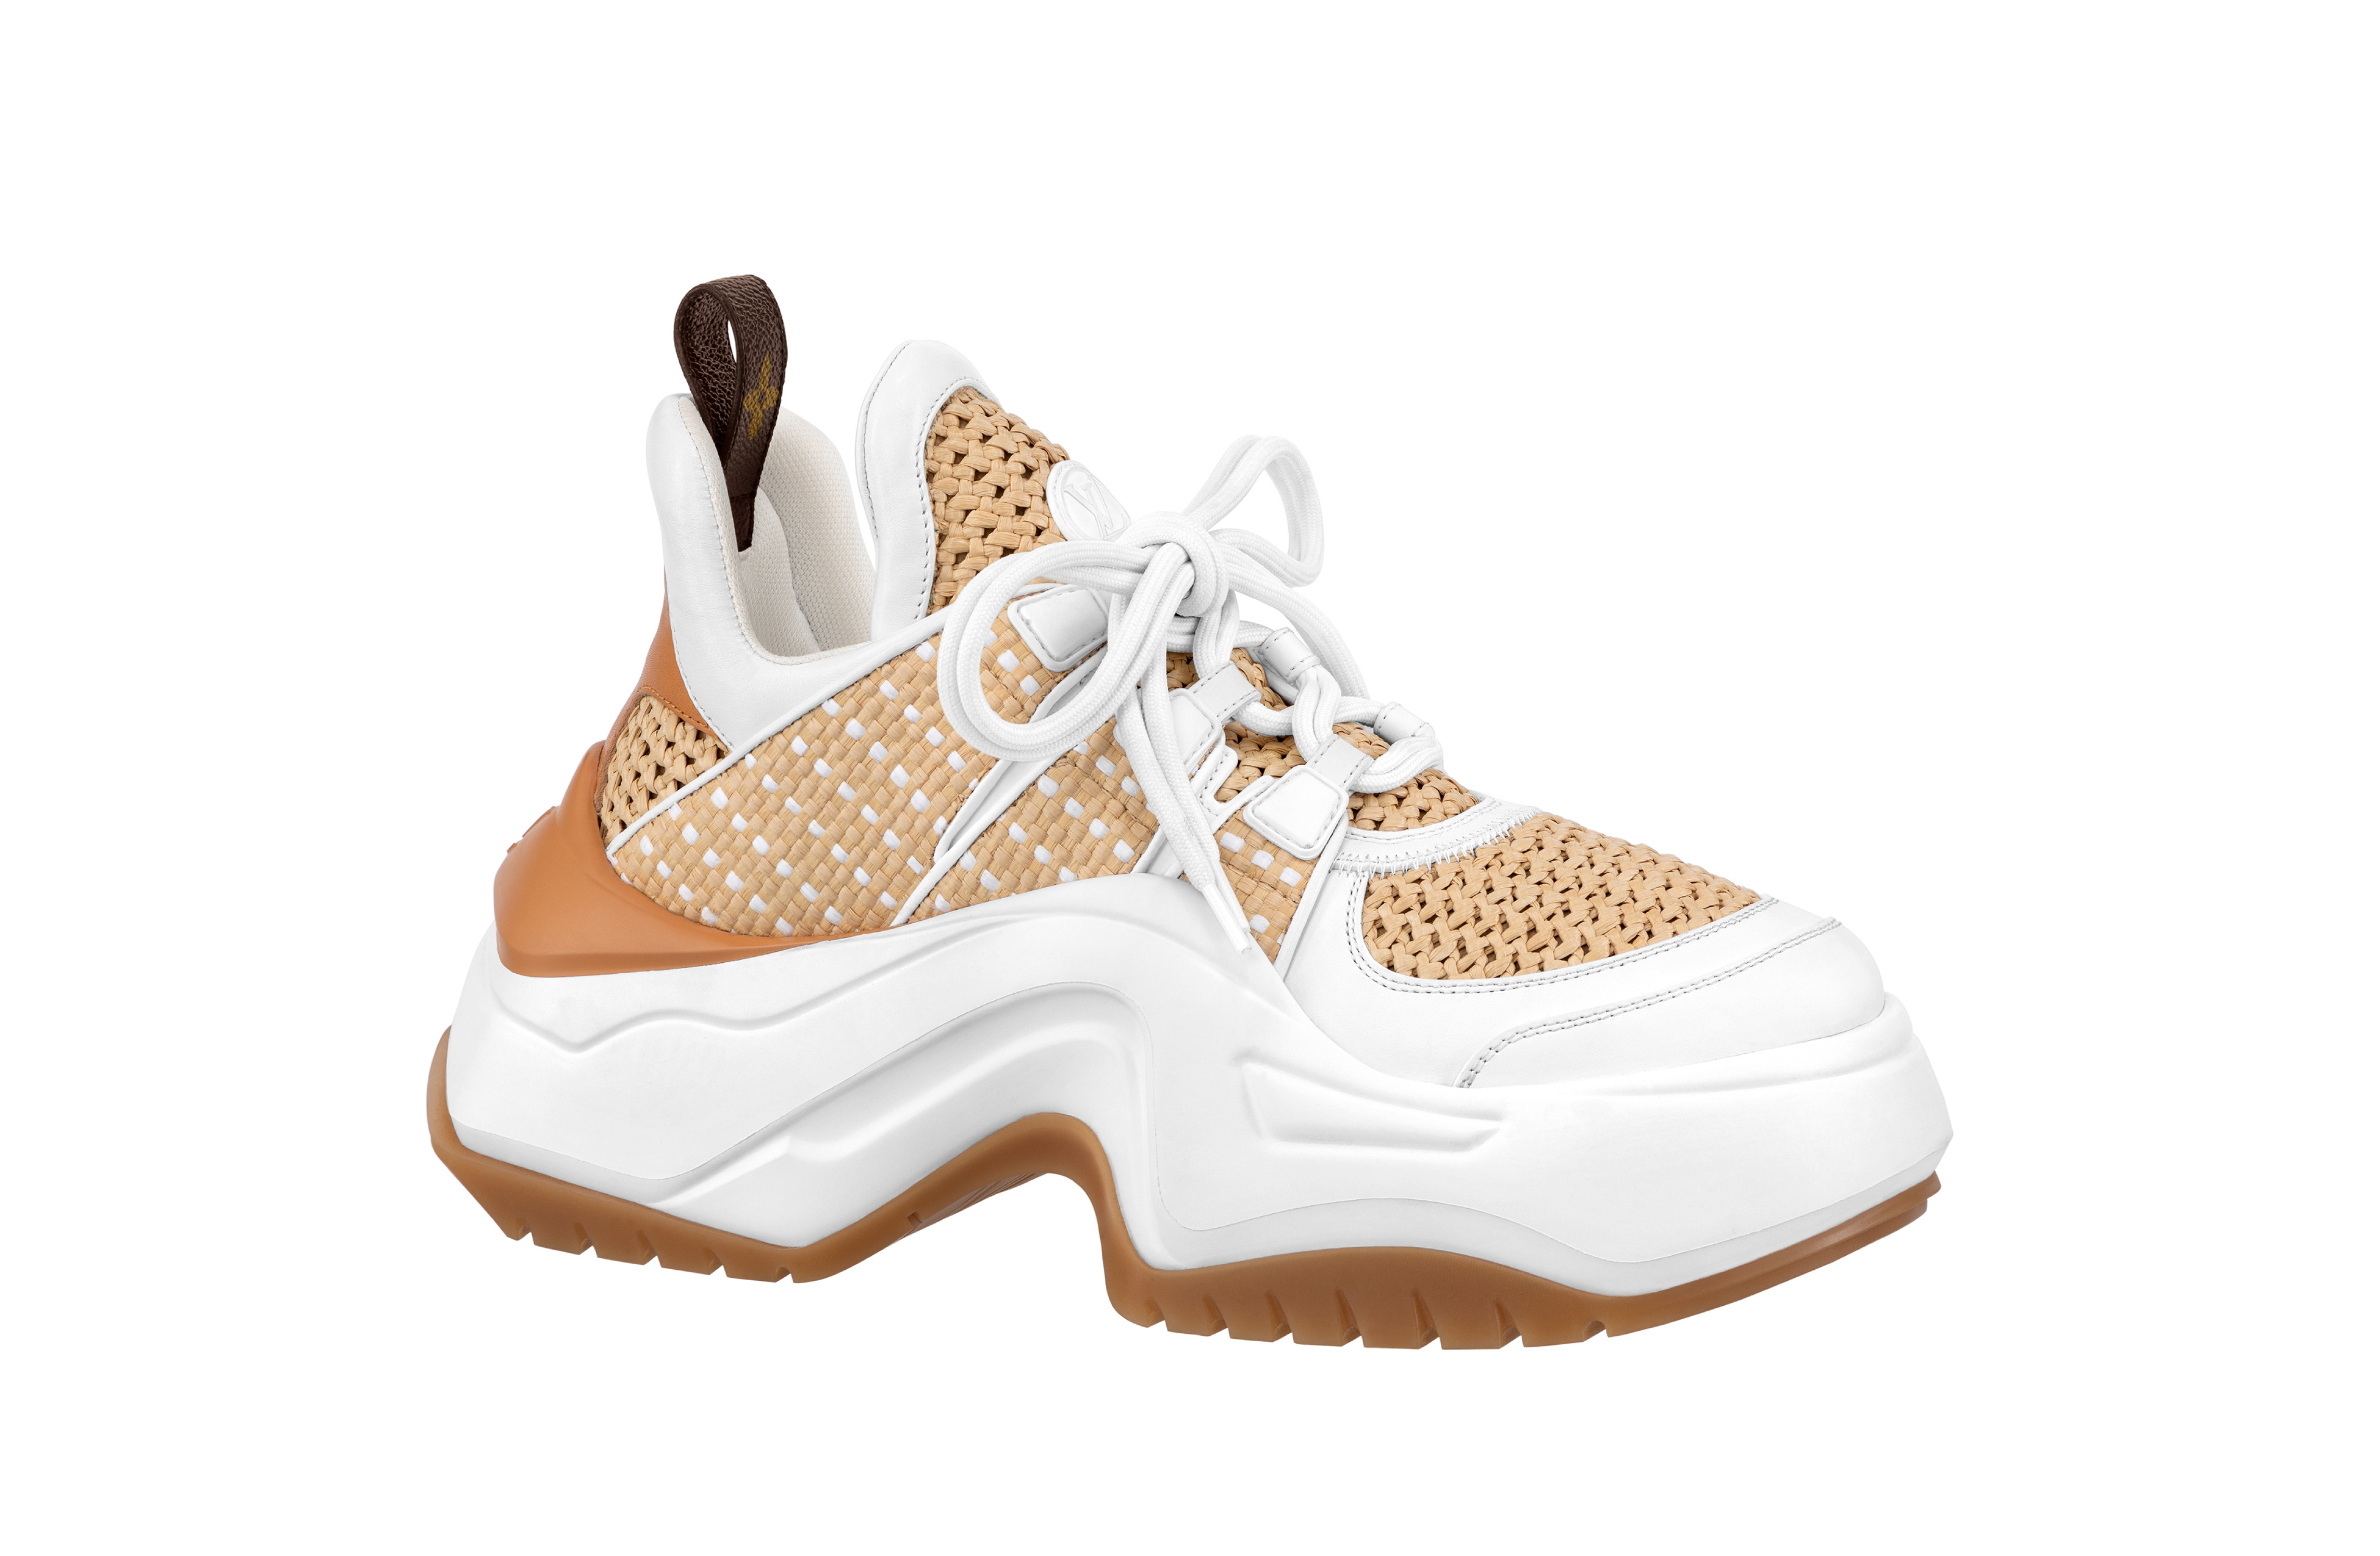 Jaden Smith Moonwalks in LV Archlight 2.0 for Louis Vuitton Campaign –  Footwear News